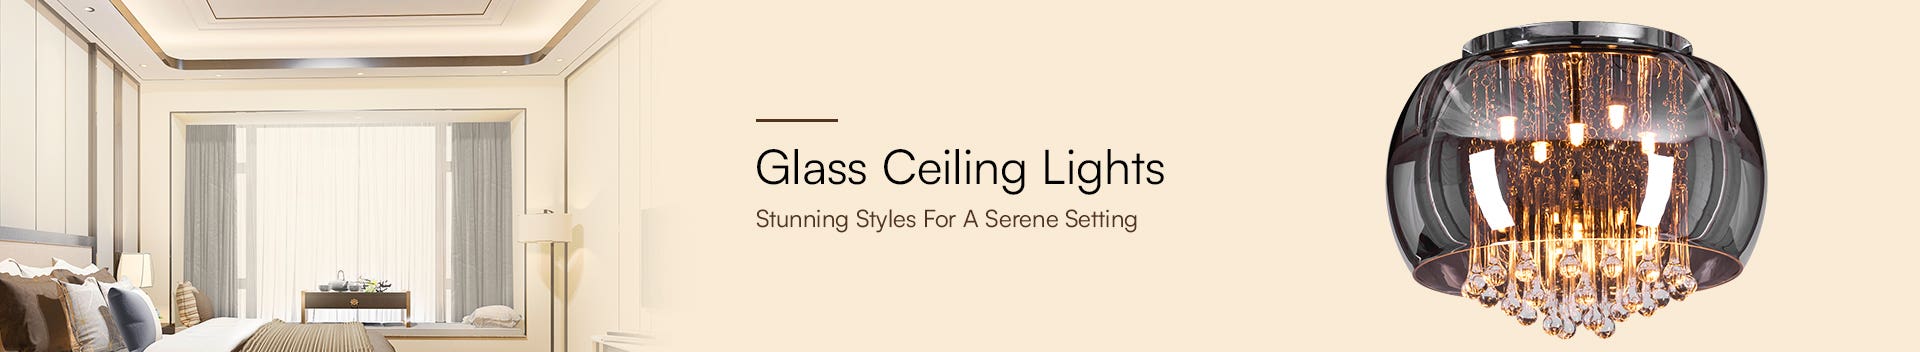 Glass Ceiling Lights